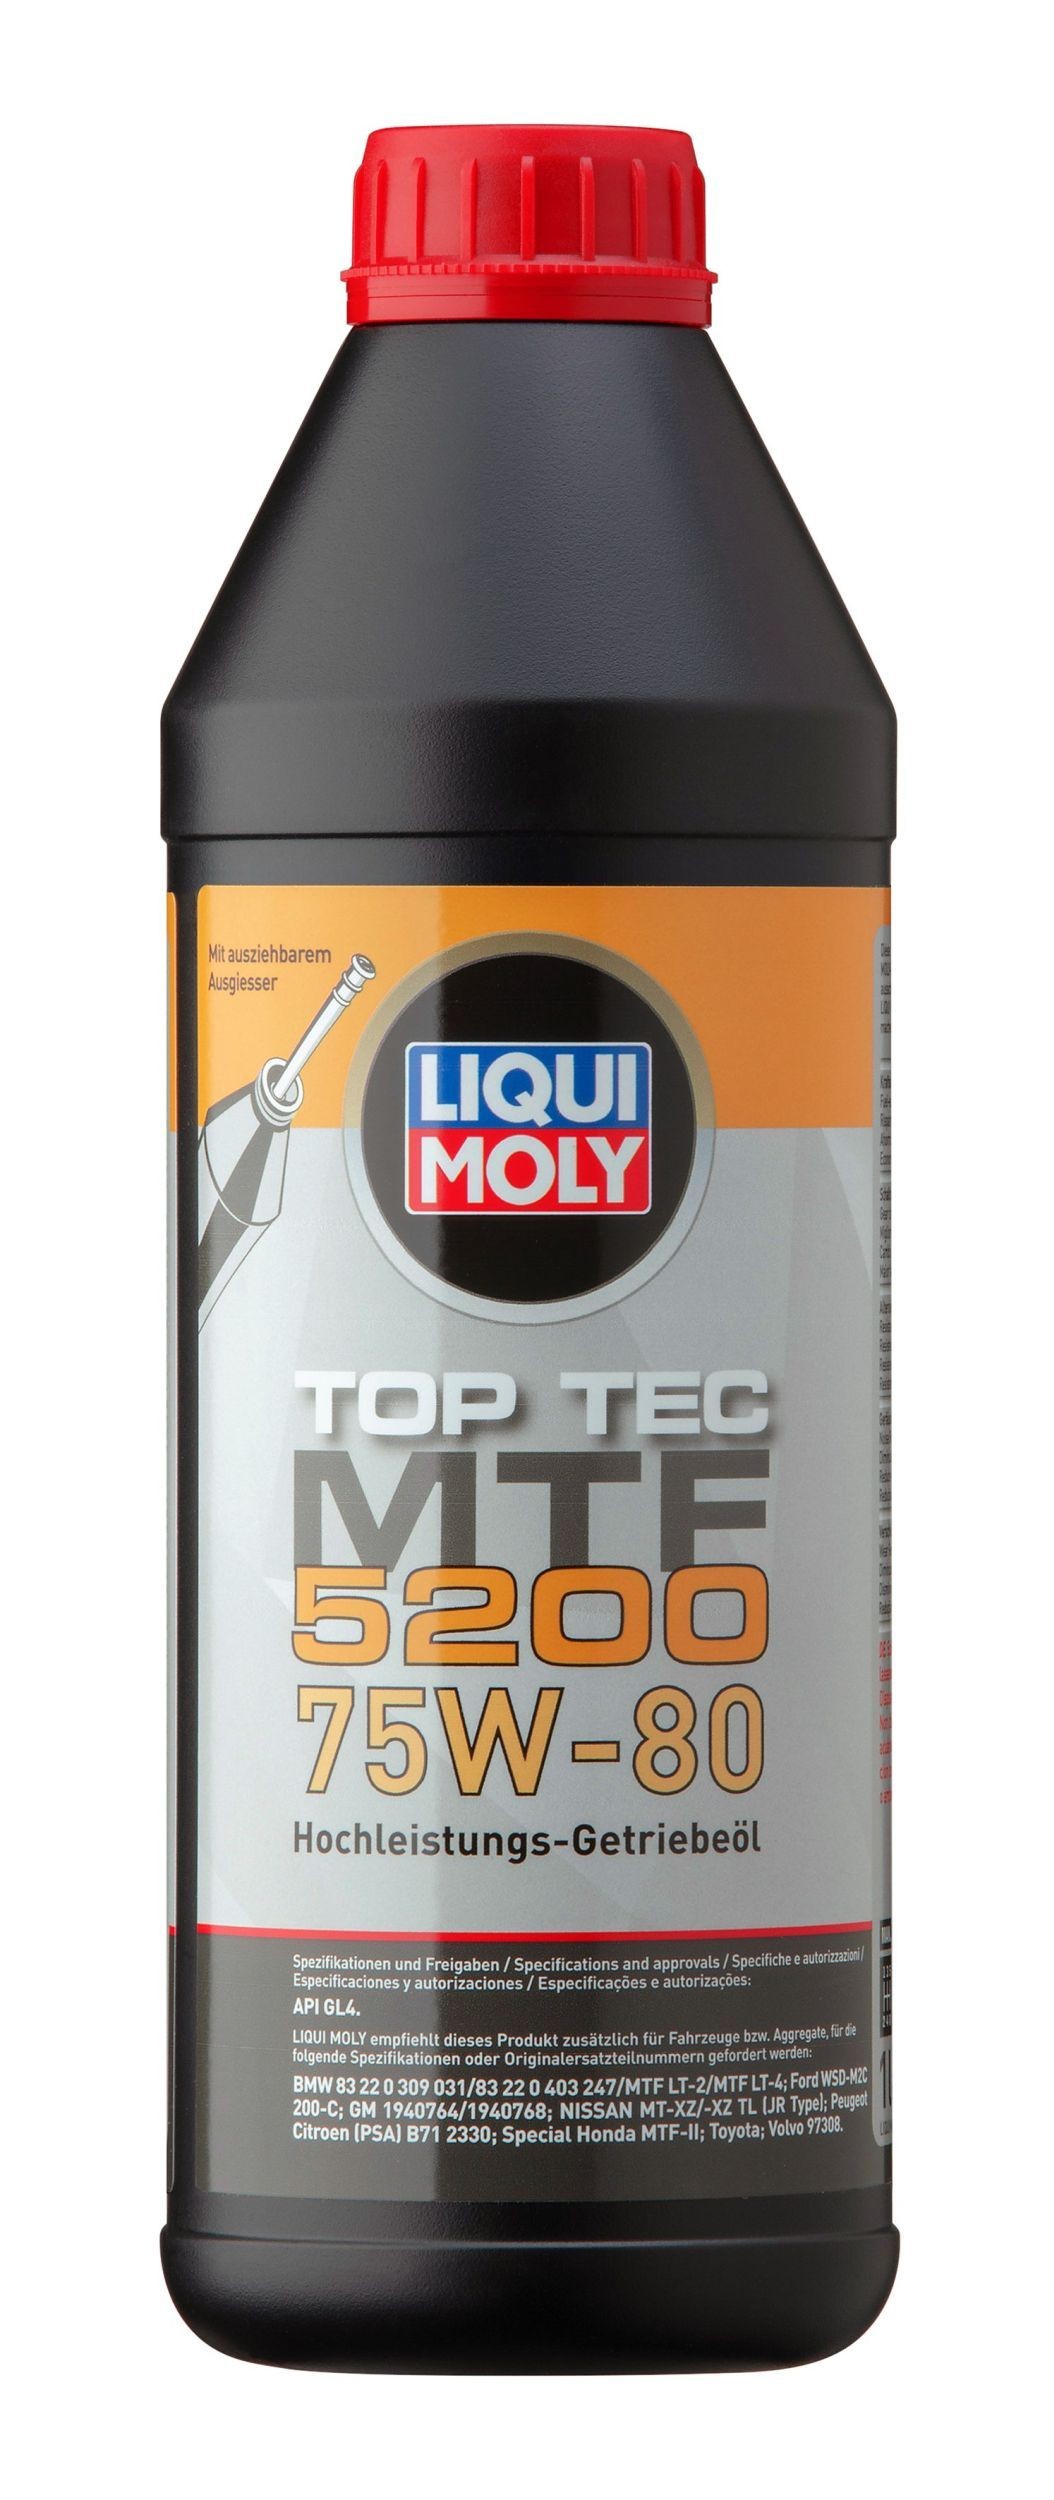 LIQUI MOLY Top Tec, MTF 5200 20845 KREIDLER Getriebeöl Motorrad zum günstigen Preis